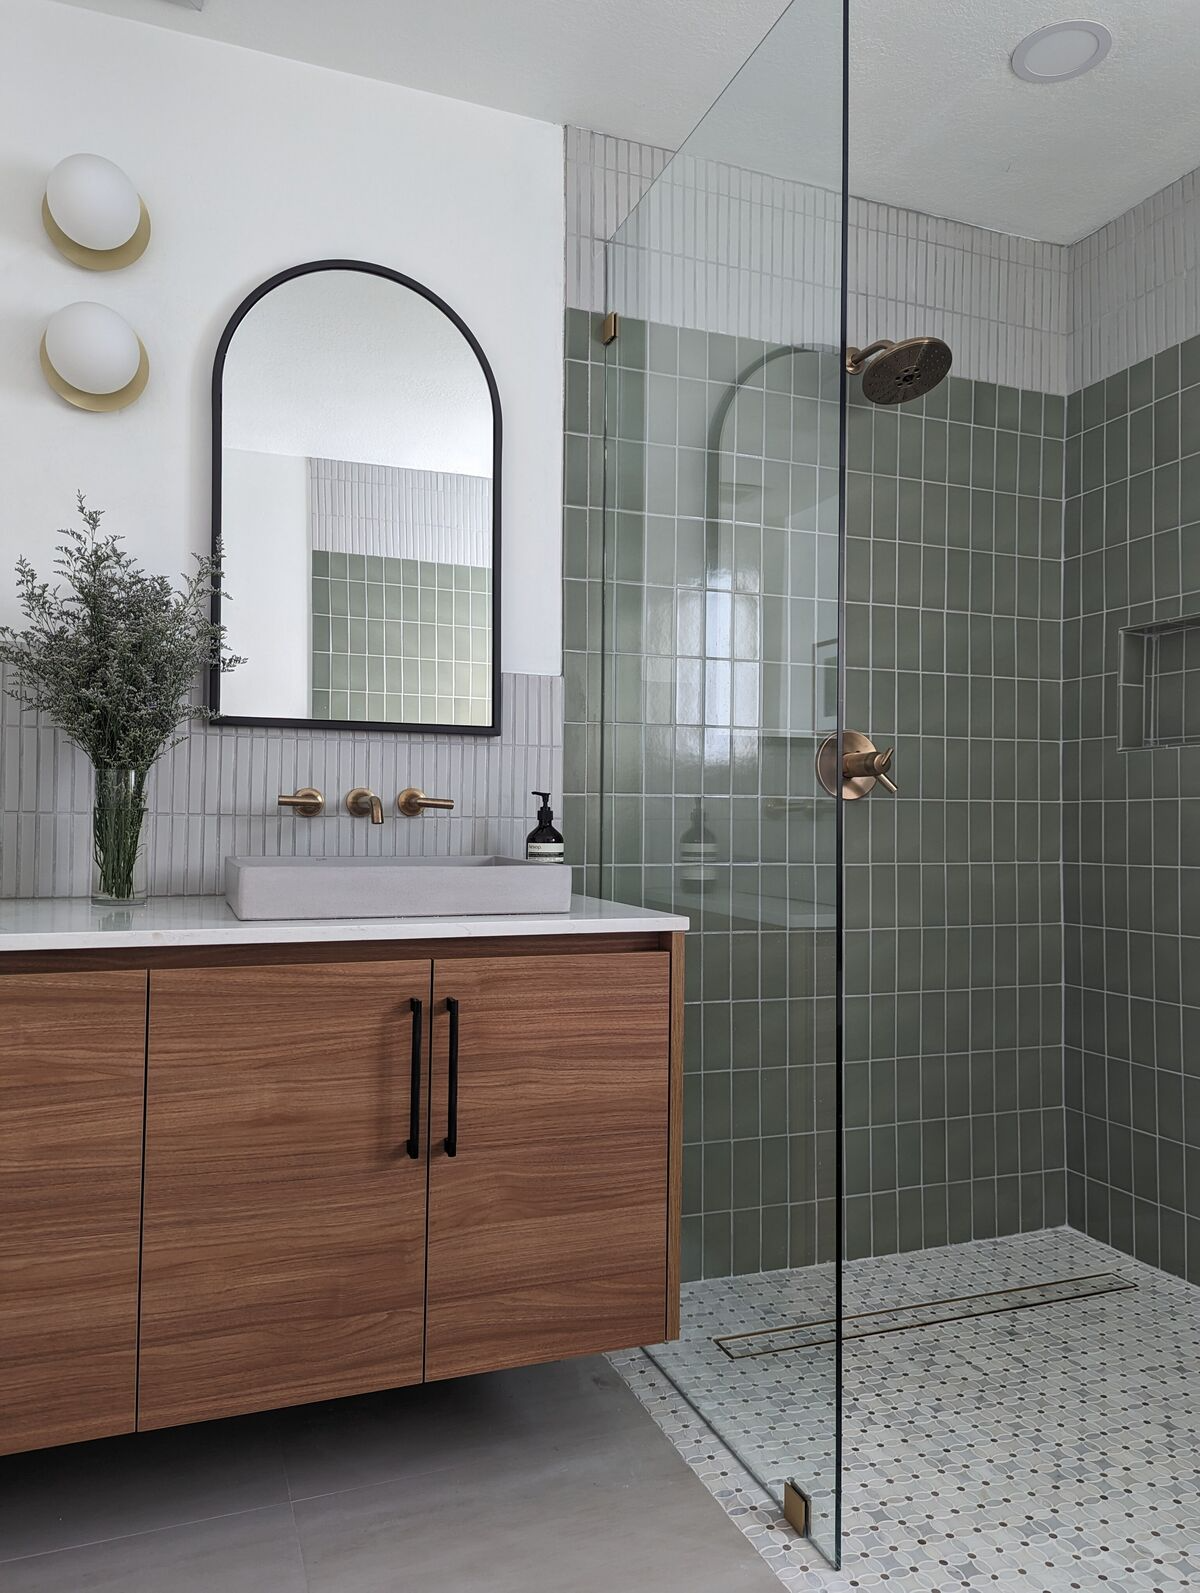 Bathroom Tile Designs : Pictures, Ideas